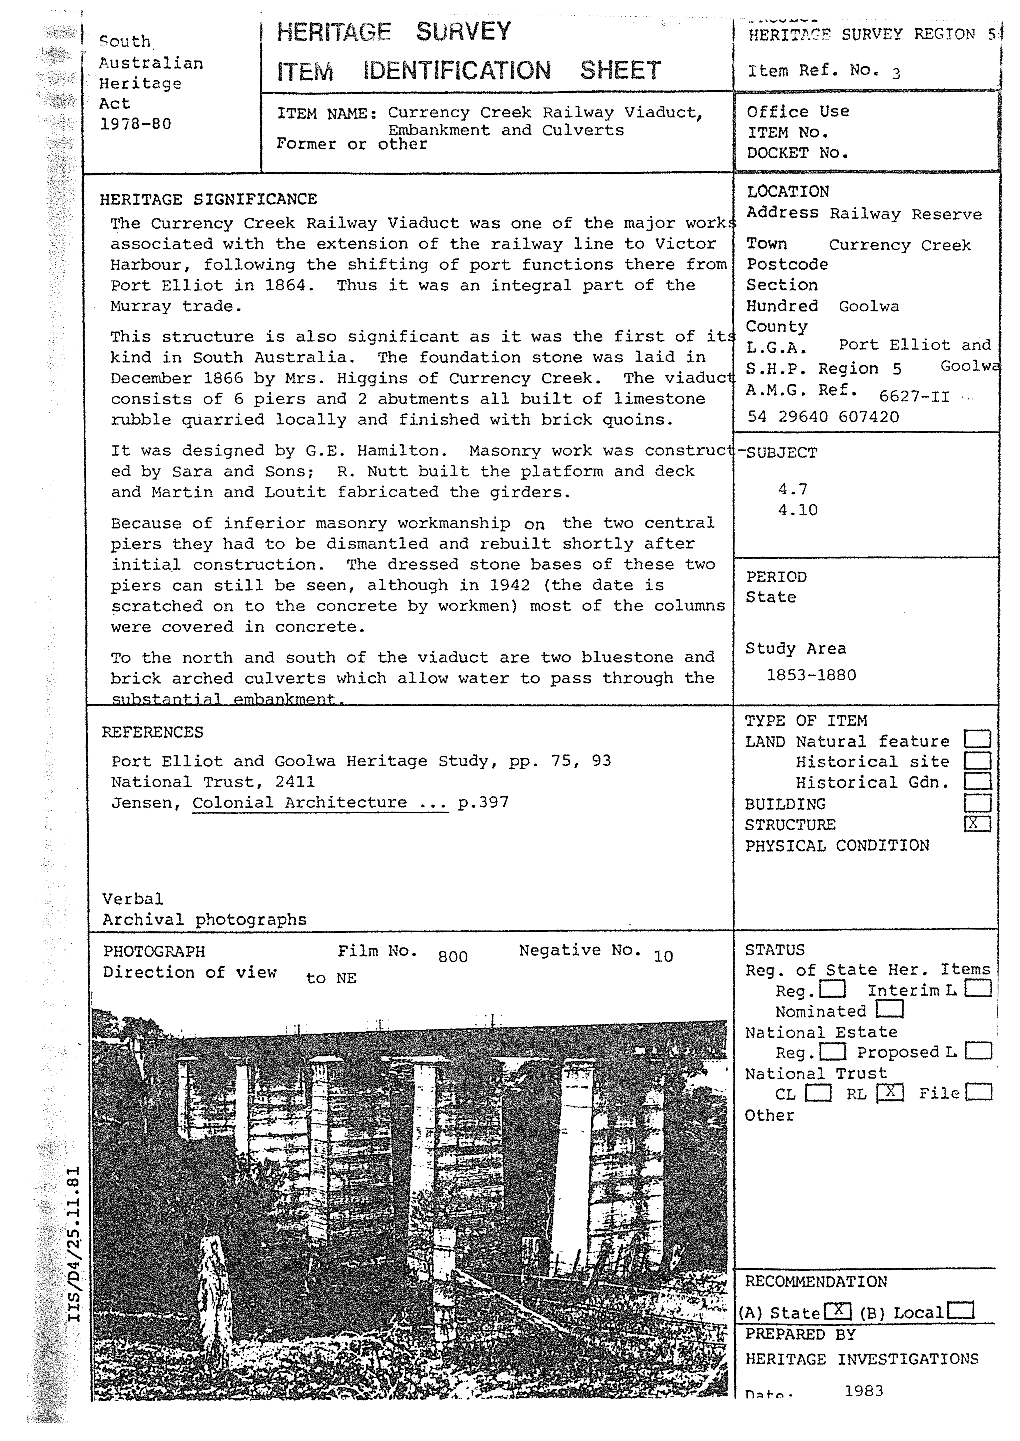 Heritage Survey Item Identification Sheet